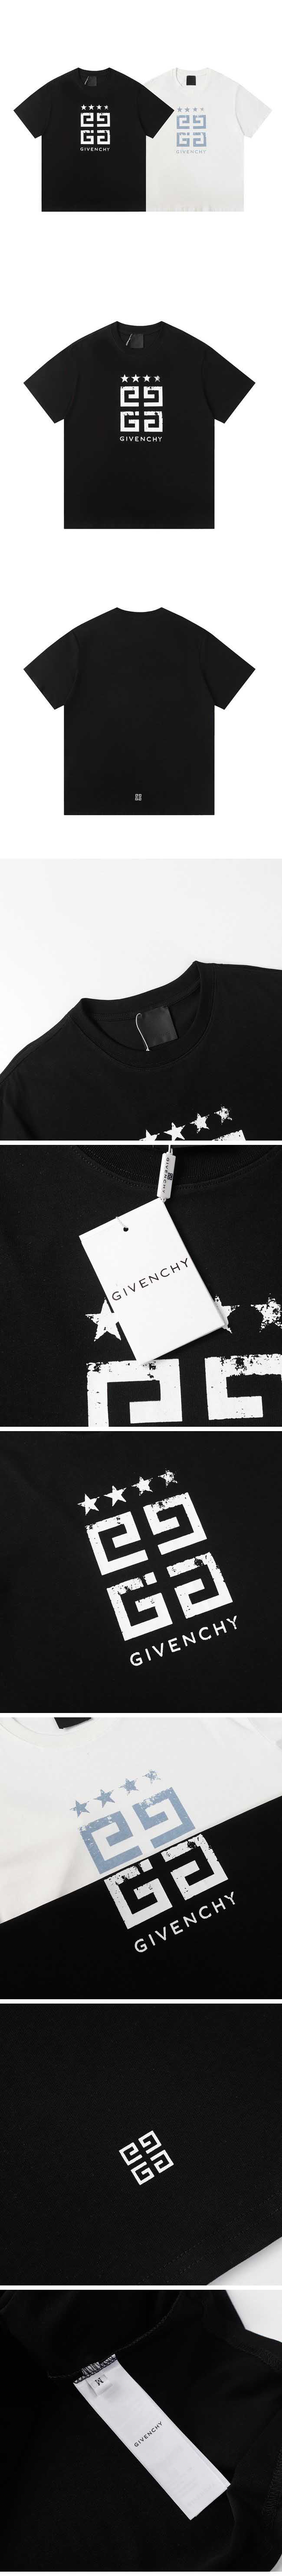 Givenchy 4G Star Tee ジバンシー ルーズ フィット 4G スター Tシャツ